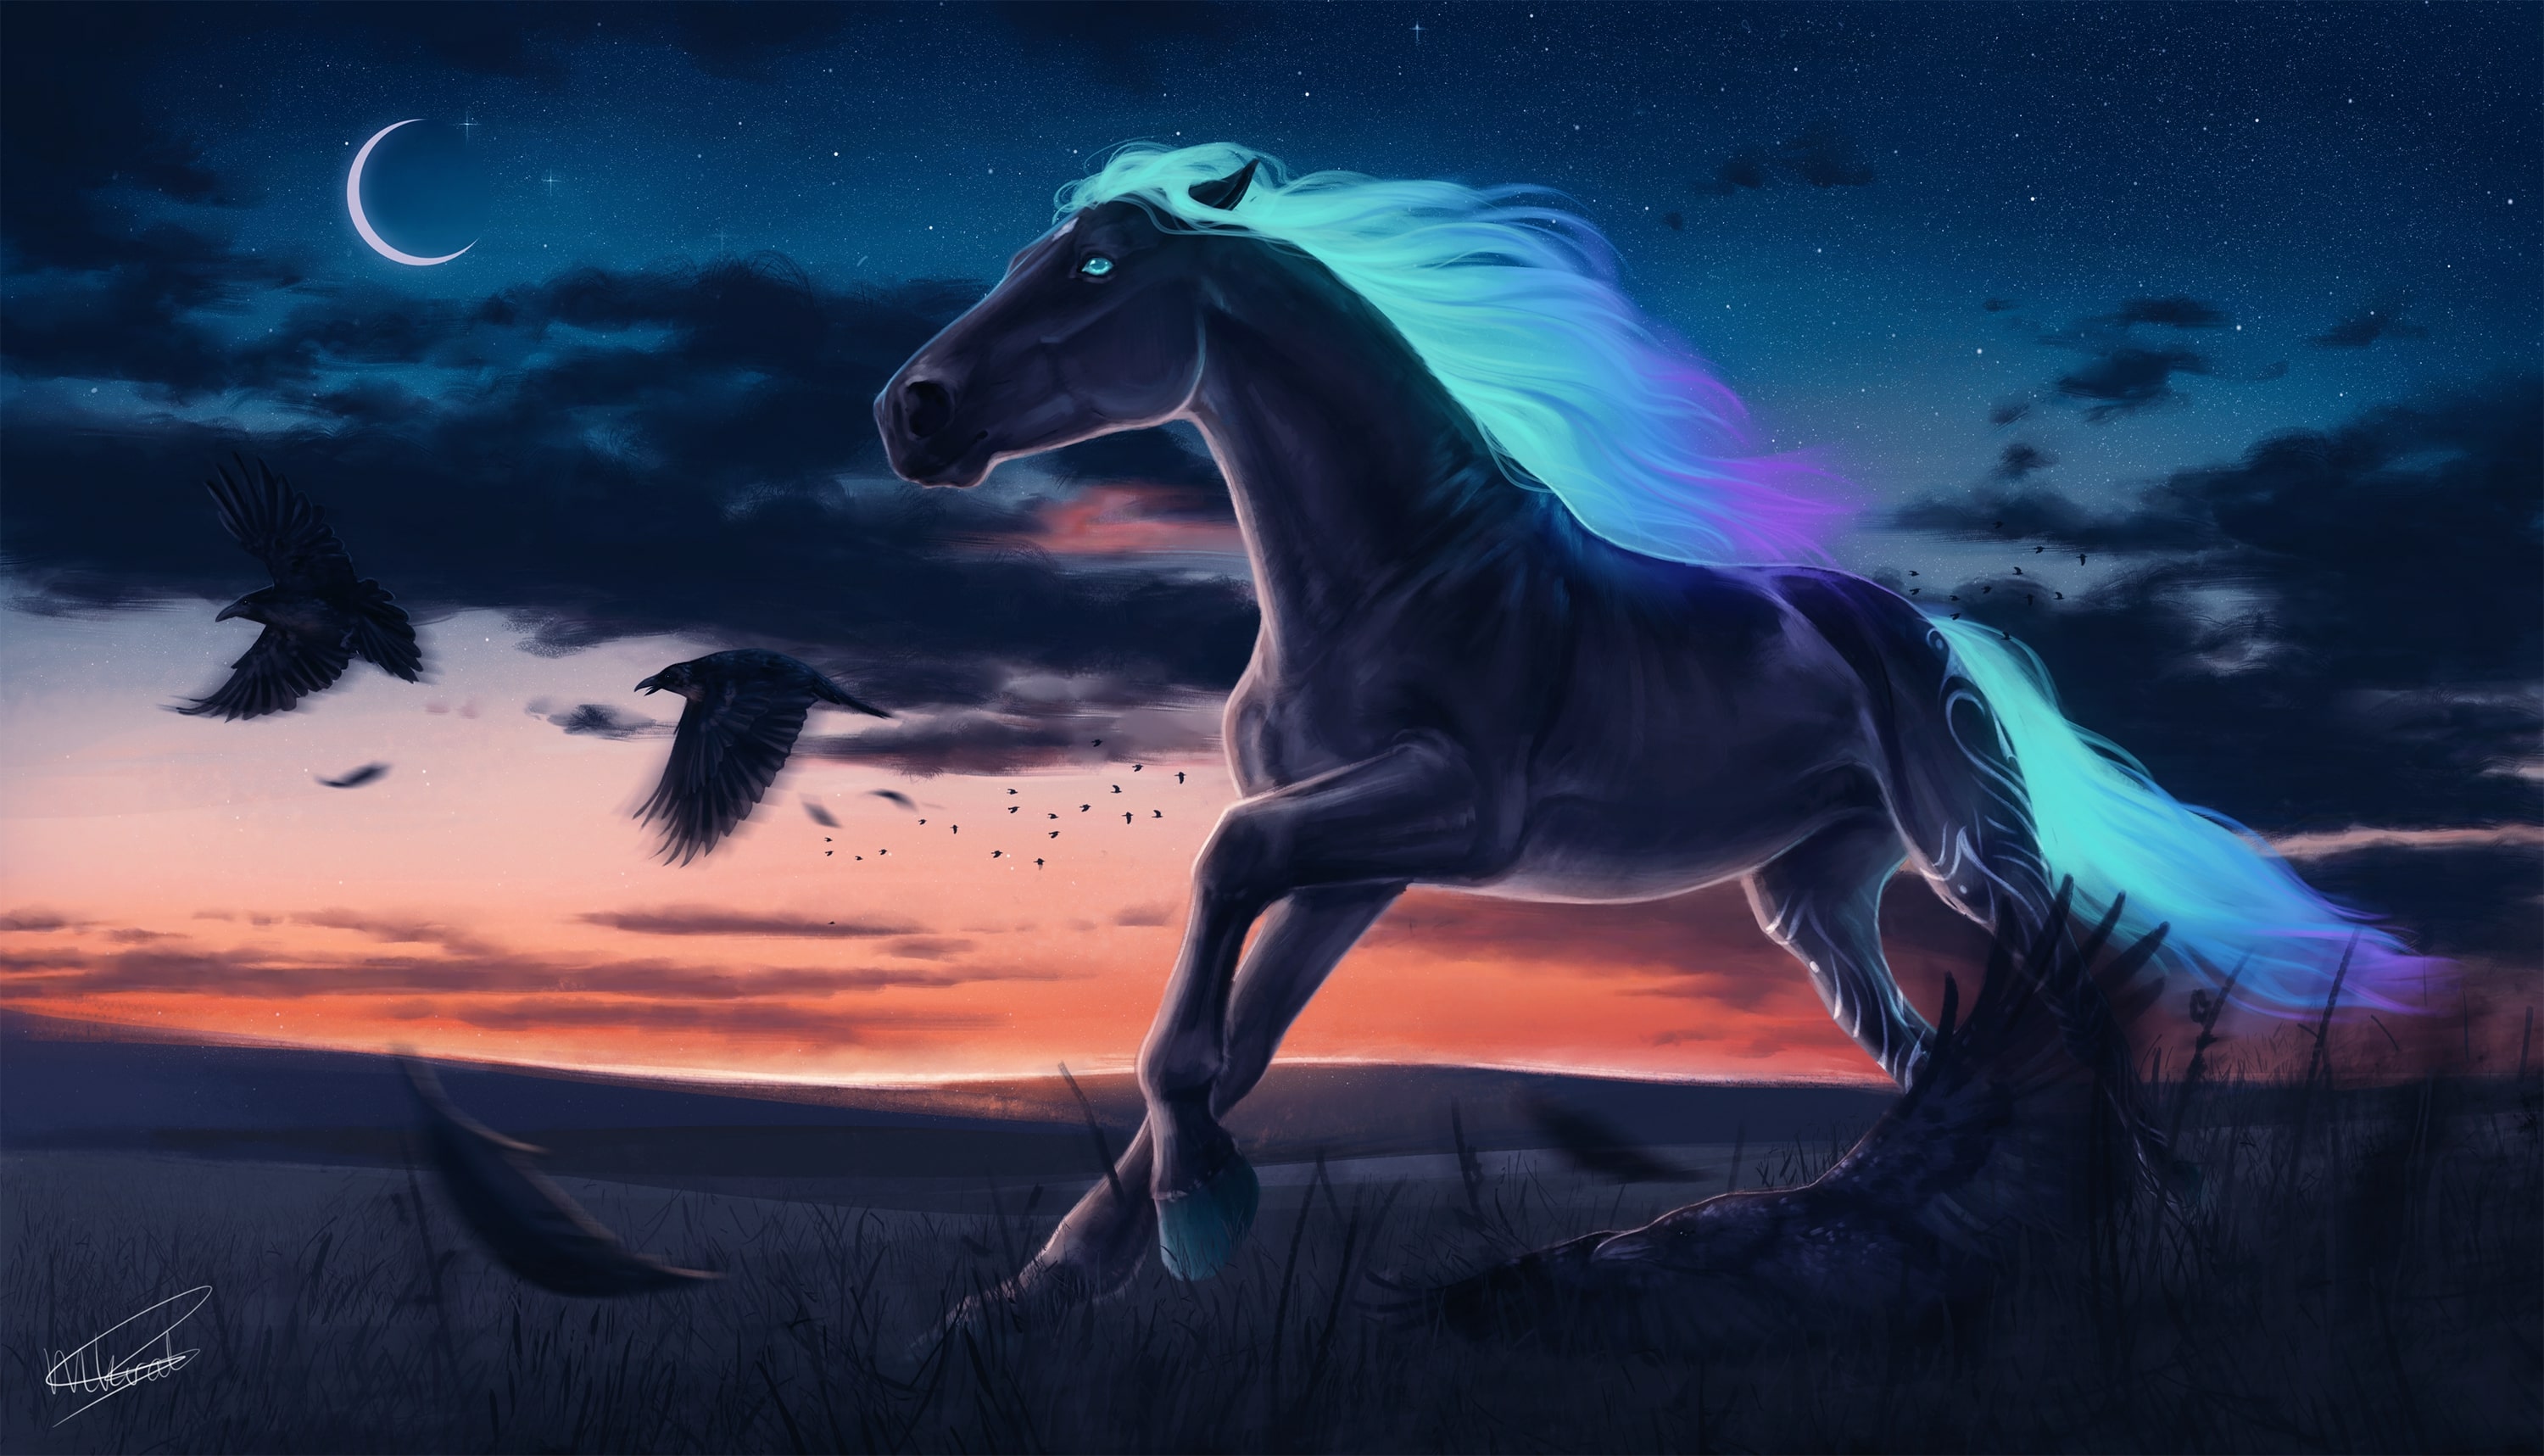 Wallpaper Crow Fantasy Horse Moon Night Background